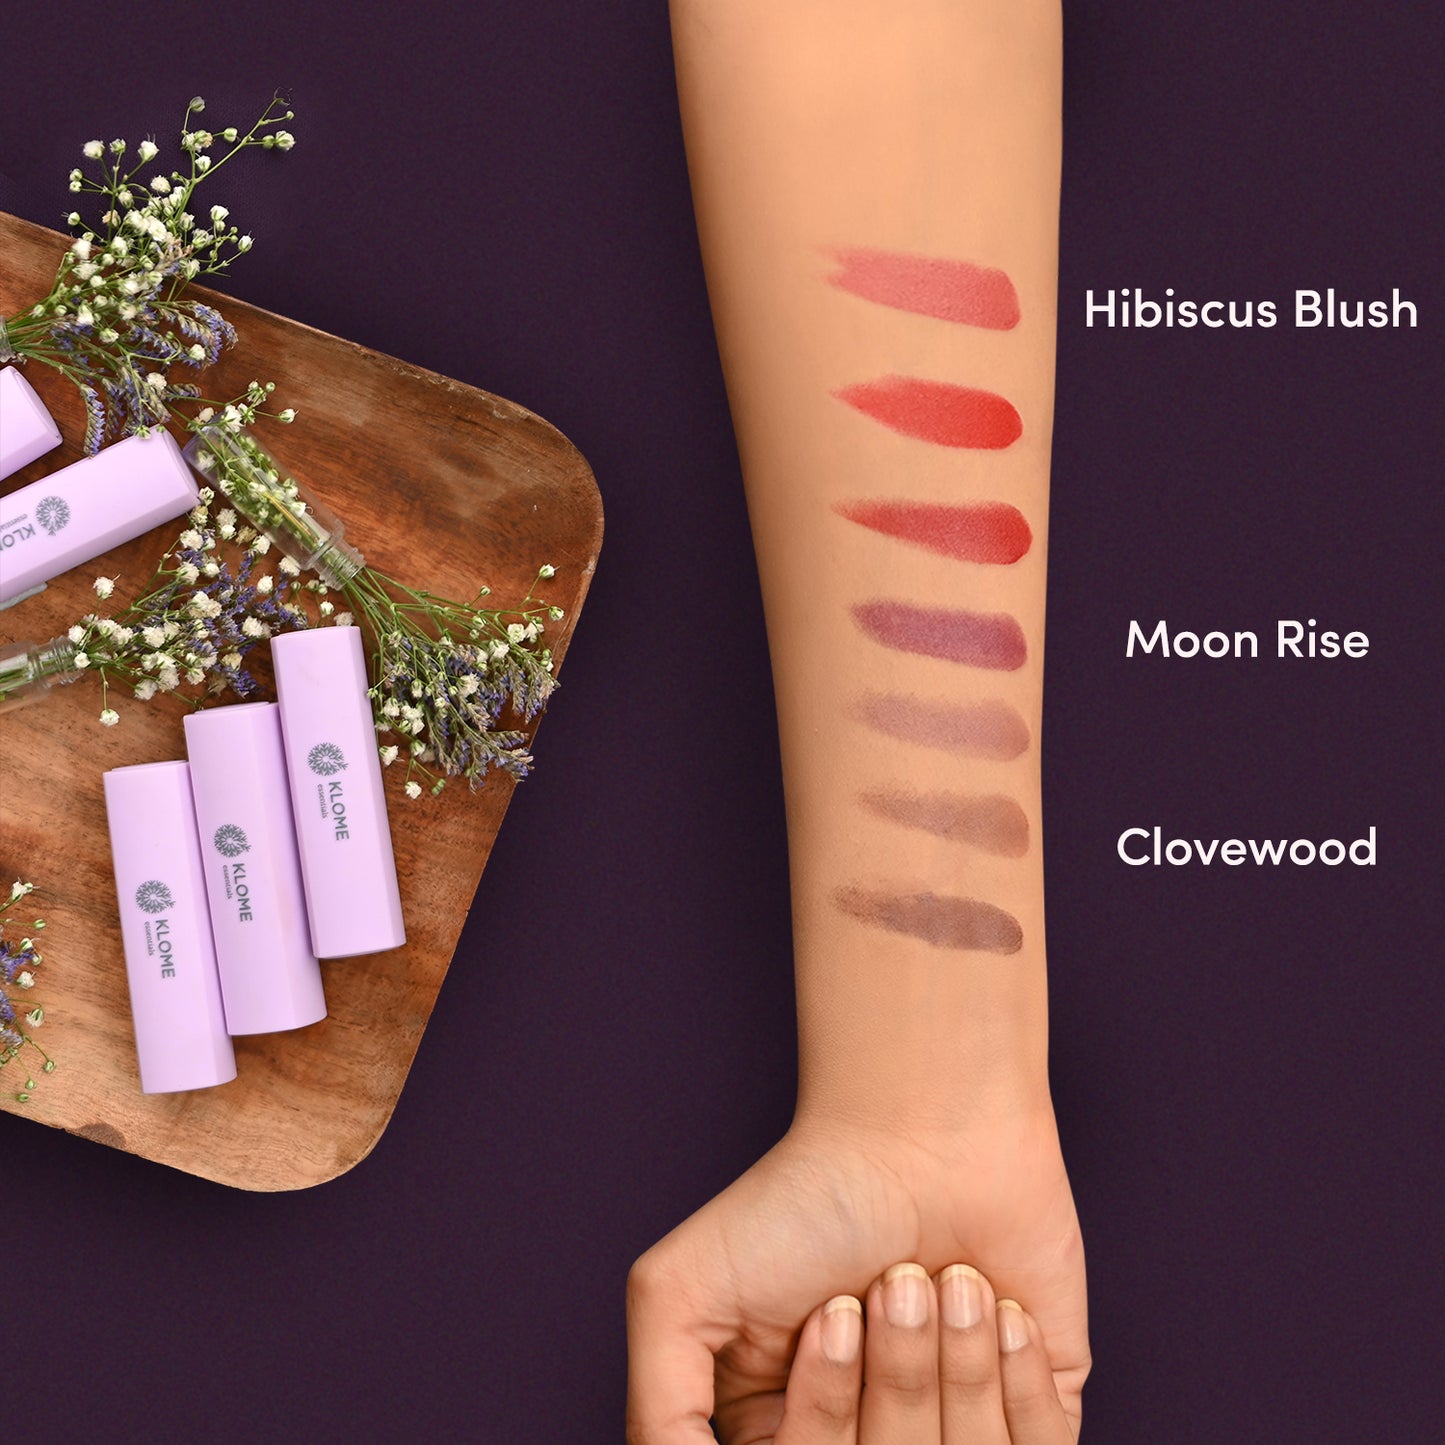 Make It Fusion (clovewood + hibiscus + moon rise) Mini Lipstick Combo